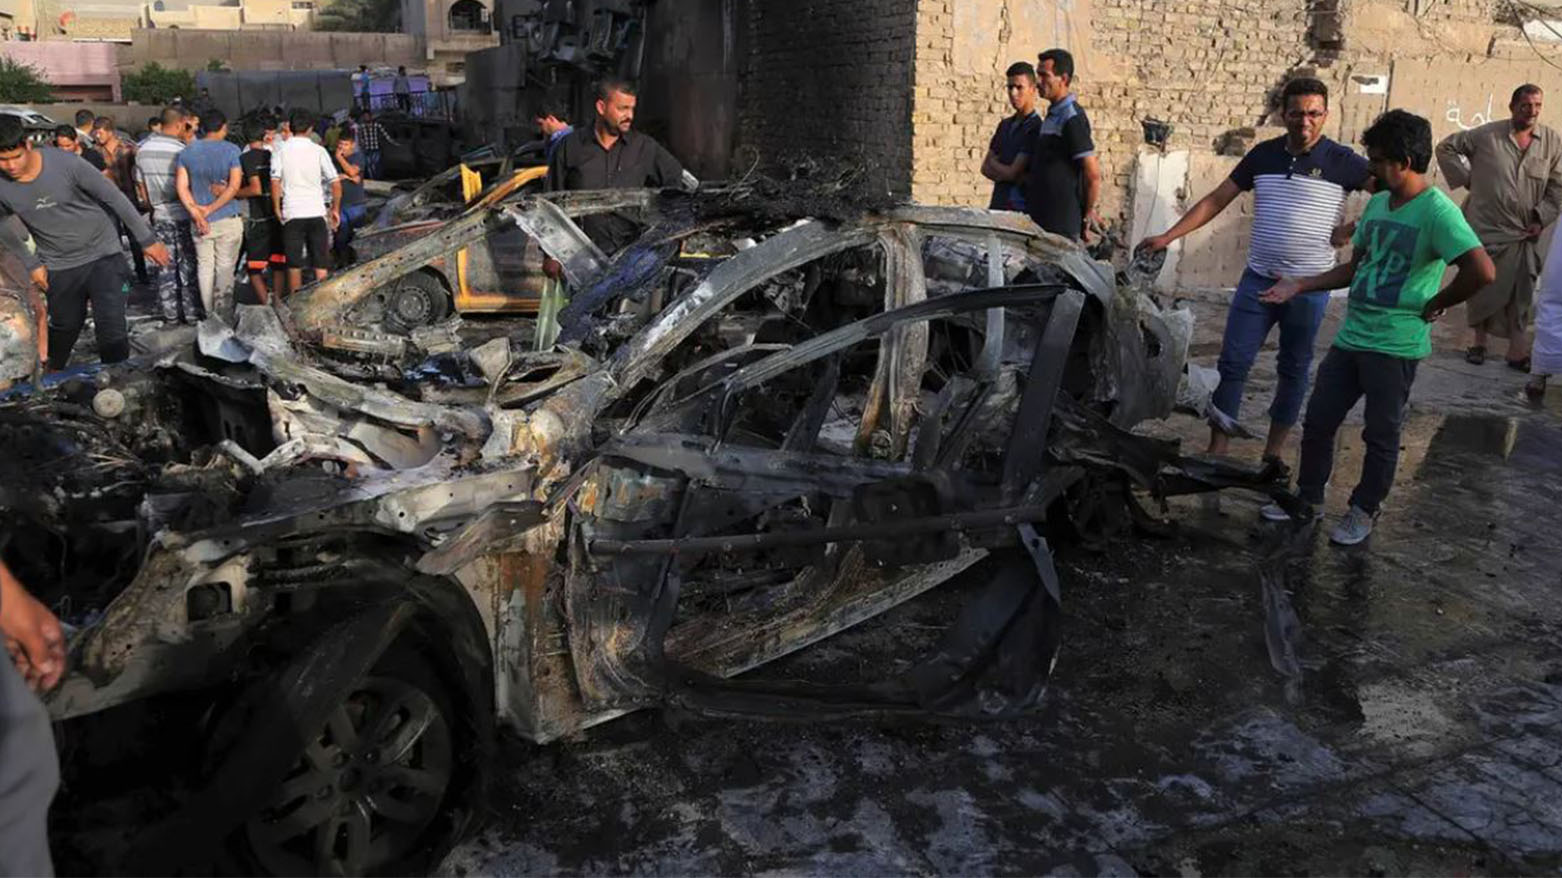 A vehicle blast in Khan Bani Saad near Baghdad, July 17, 2015 (PHOTO: AFP)